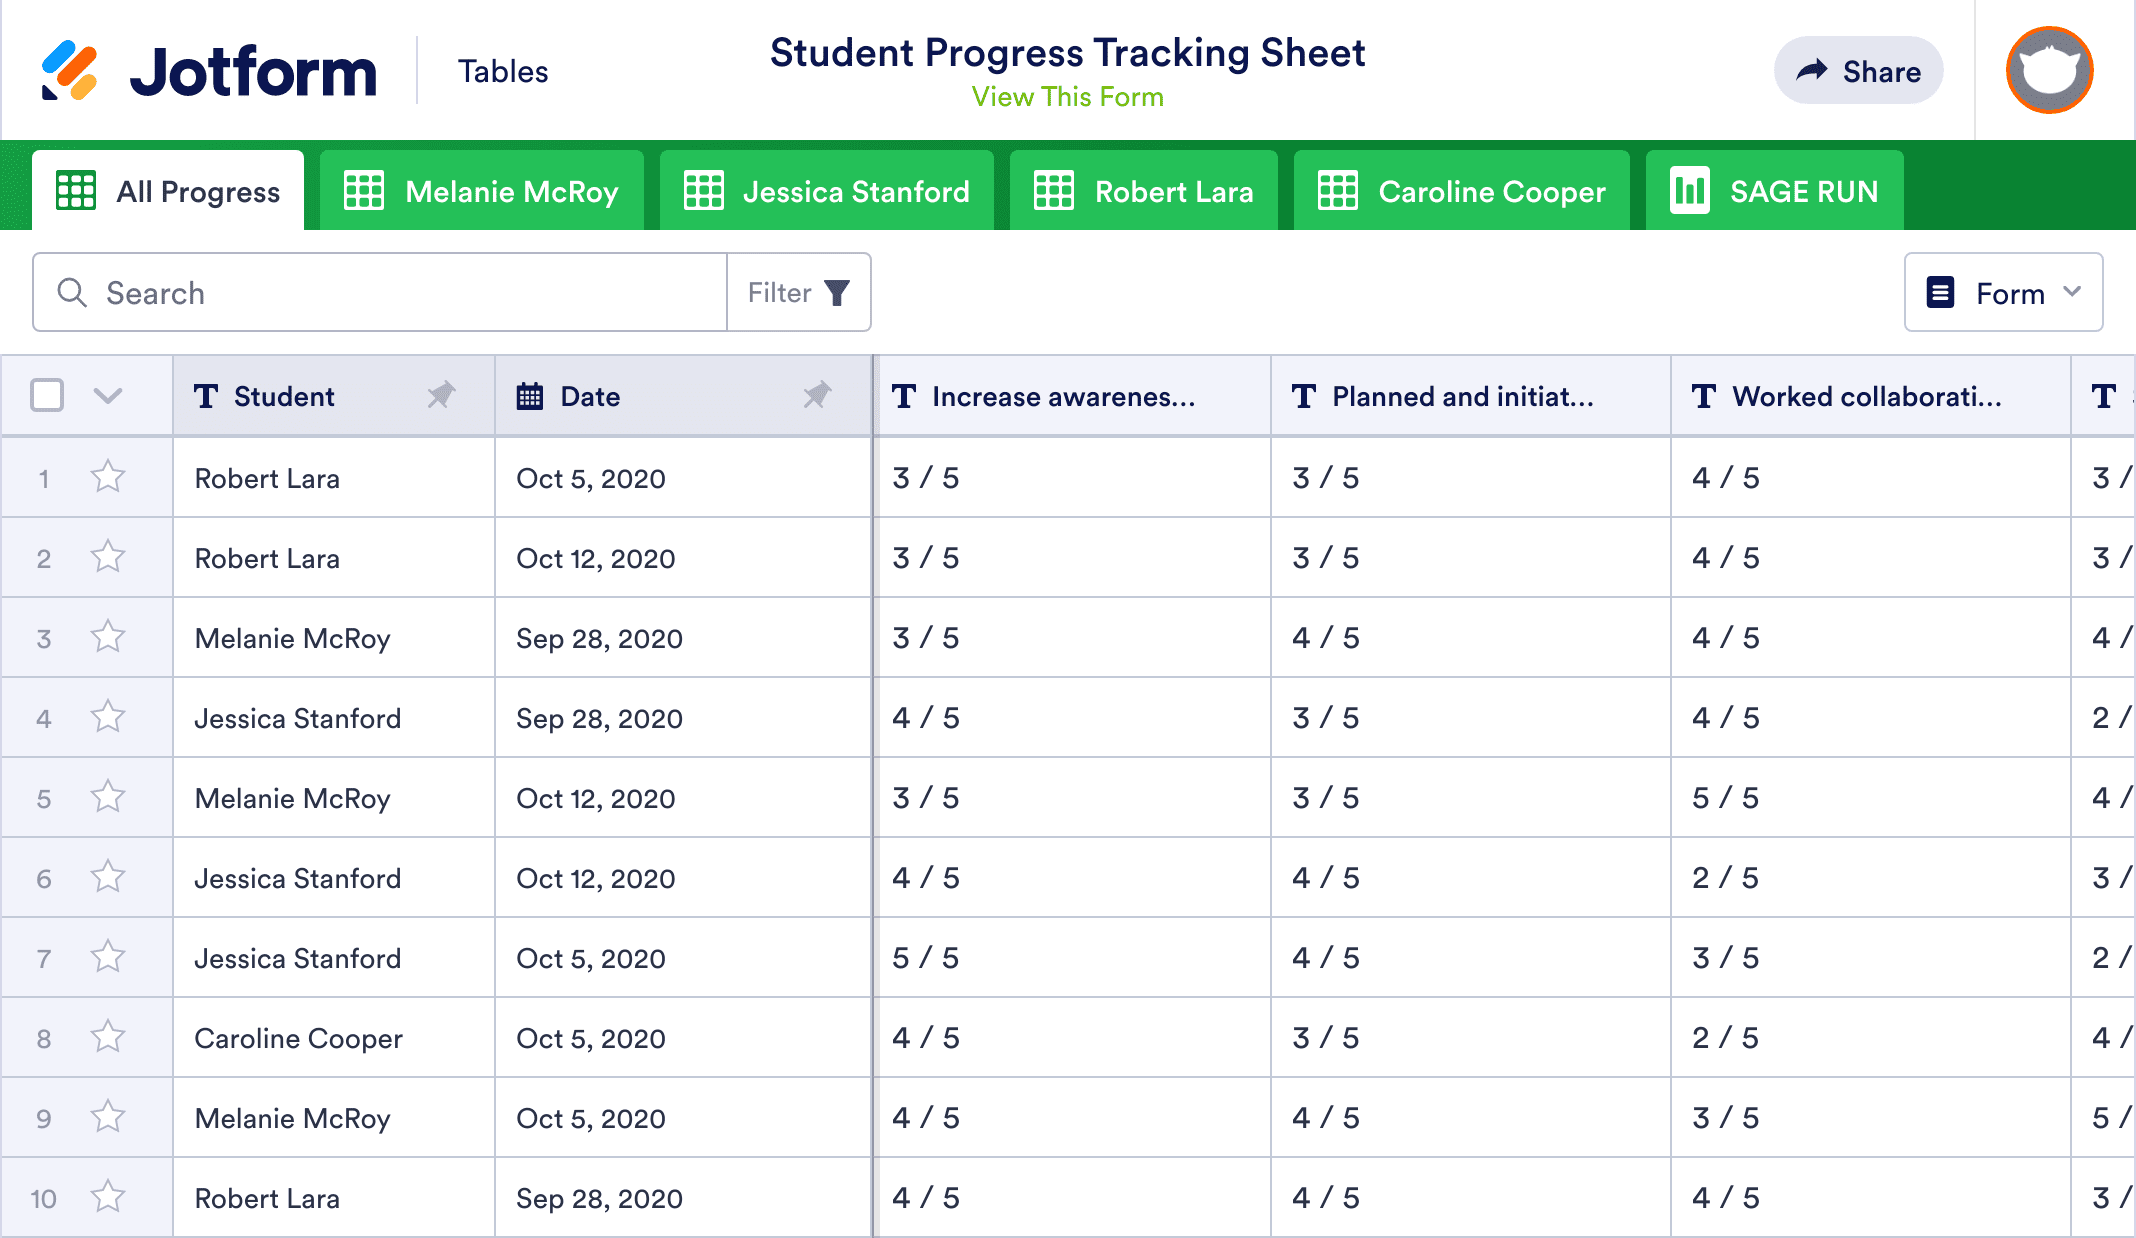 Student Progress Tracking Sheet